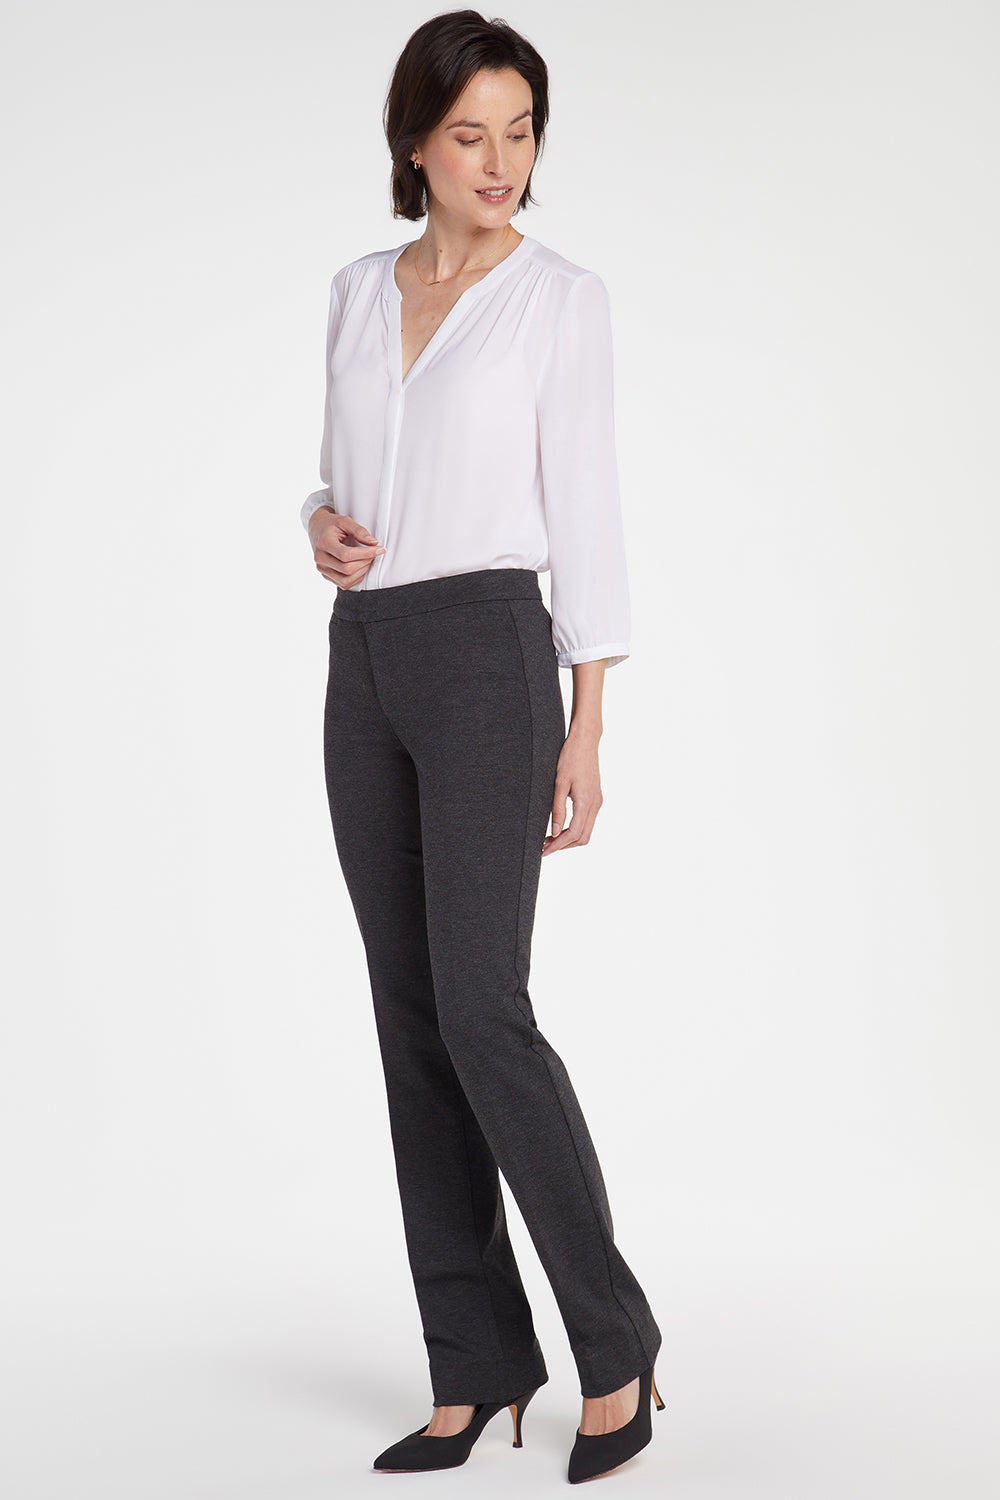 Slim Trouser Pants In Petite In Ponte Knit - Charcoal Heathered Grey | NYDJ